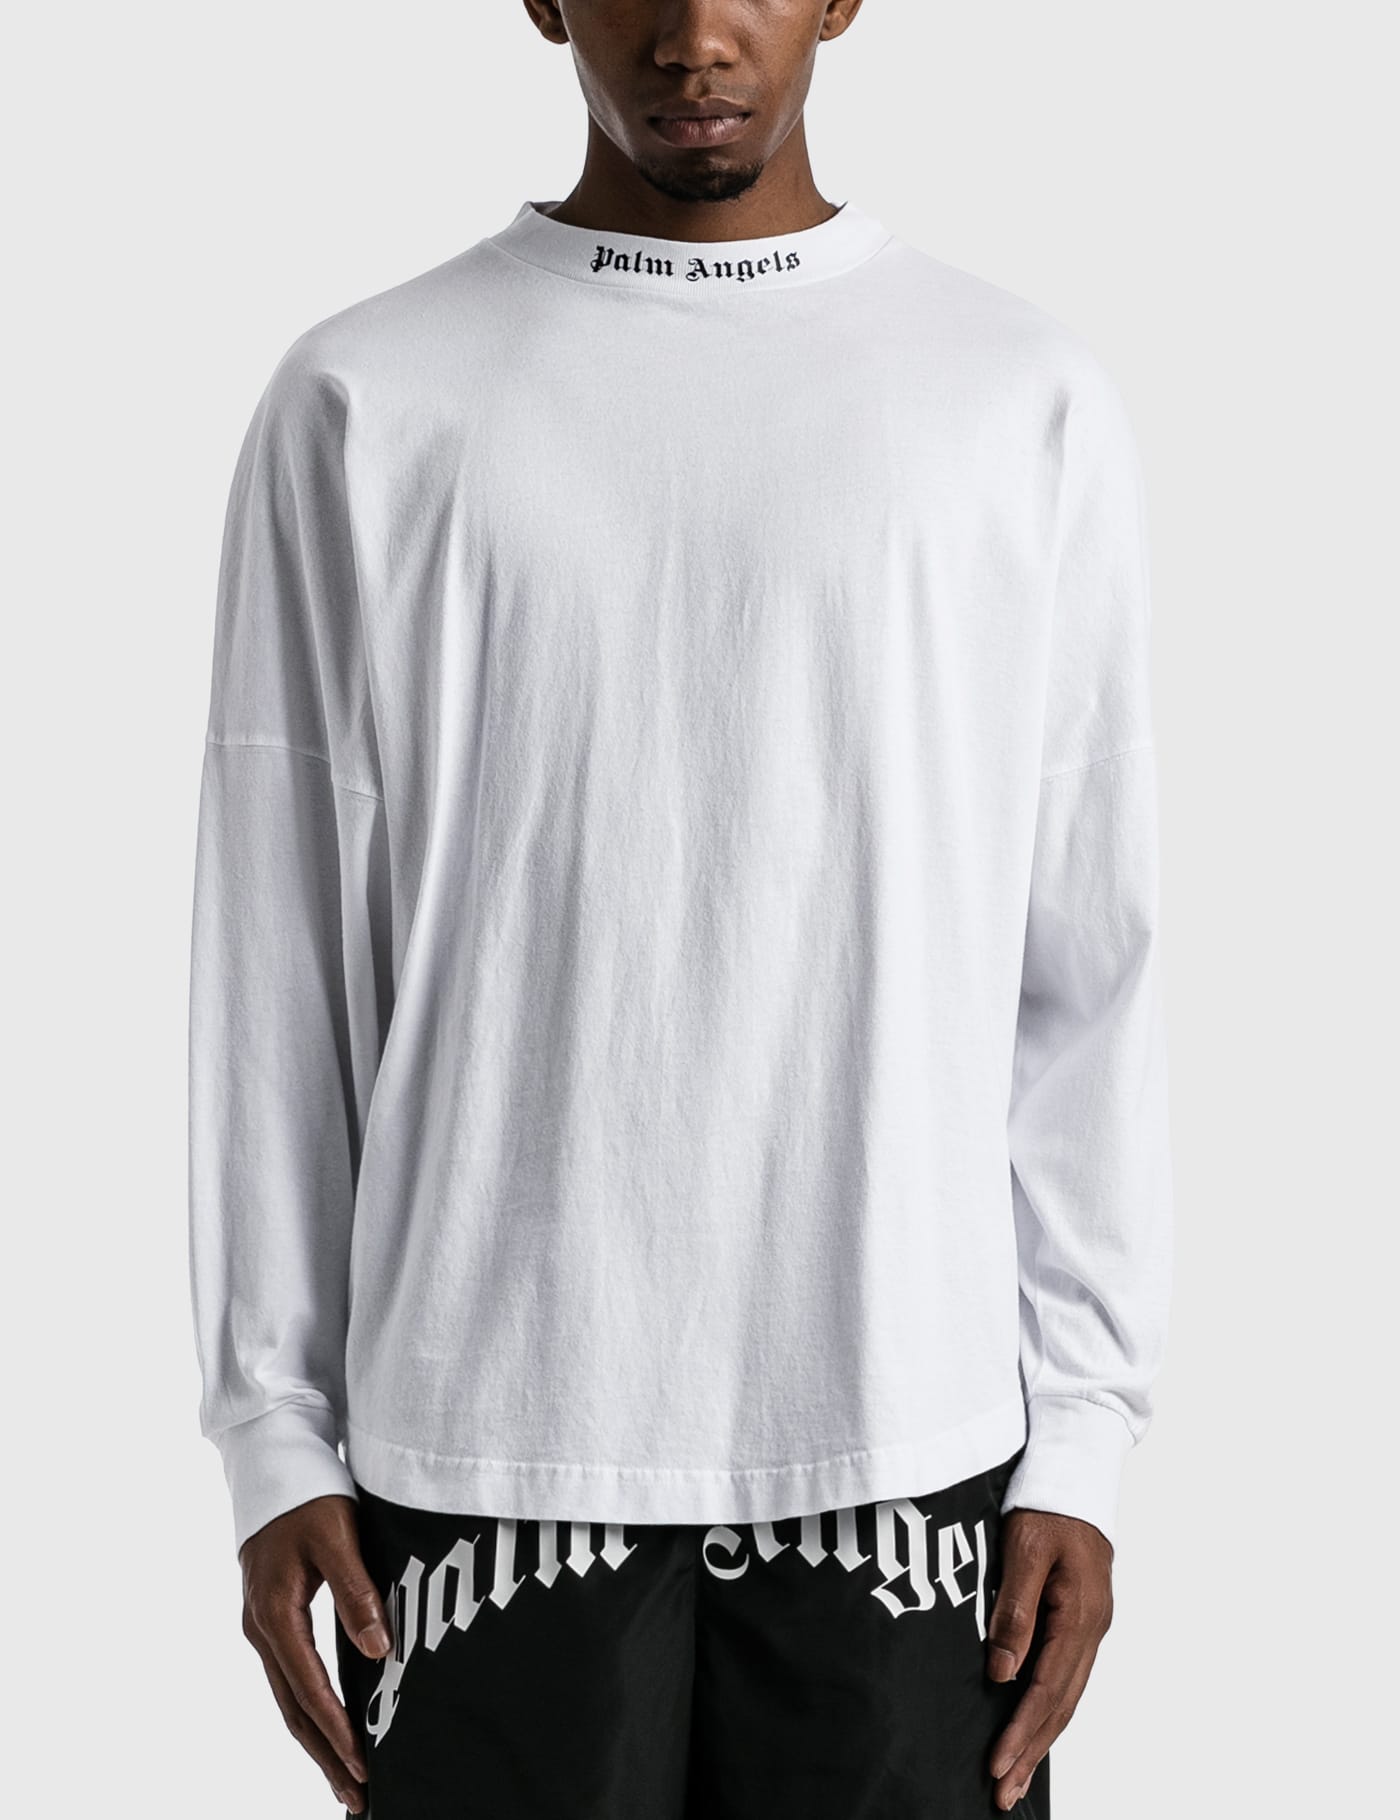 Palm Angels - Doubled Logo Oversized Long Sleeve T-shirt | HBX 